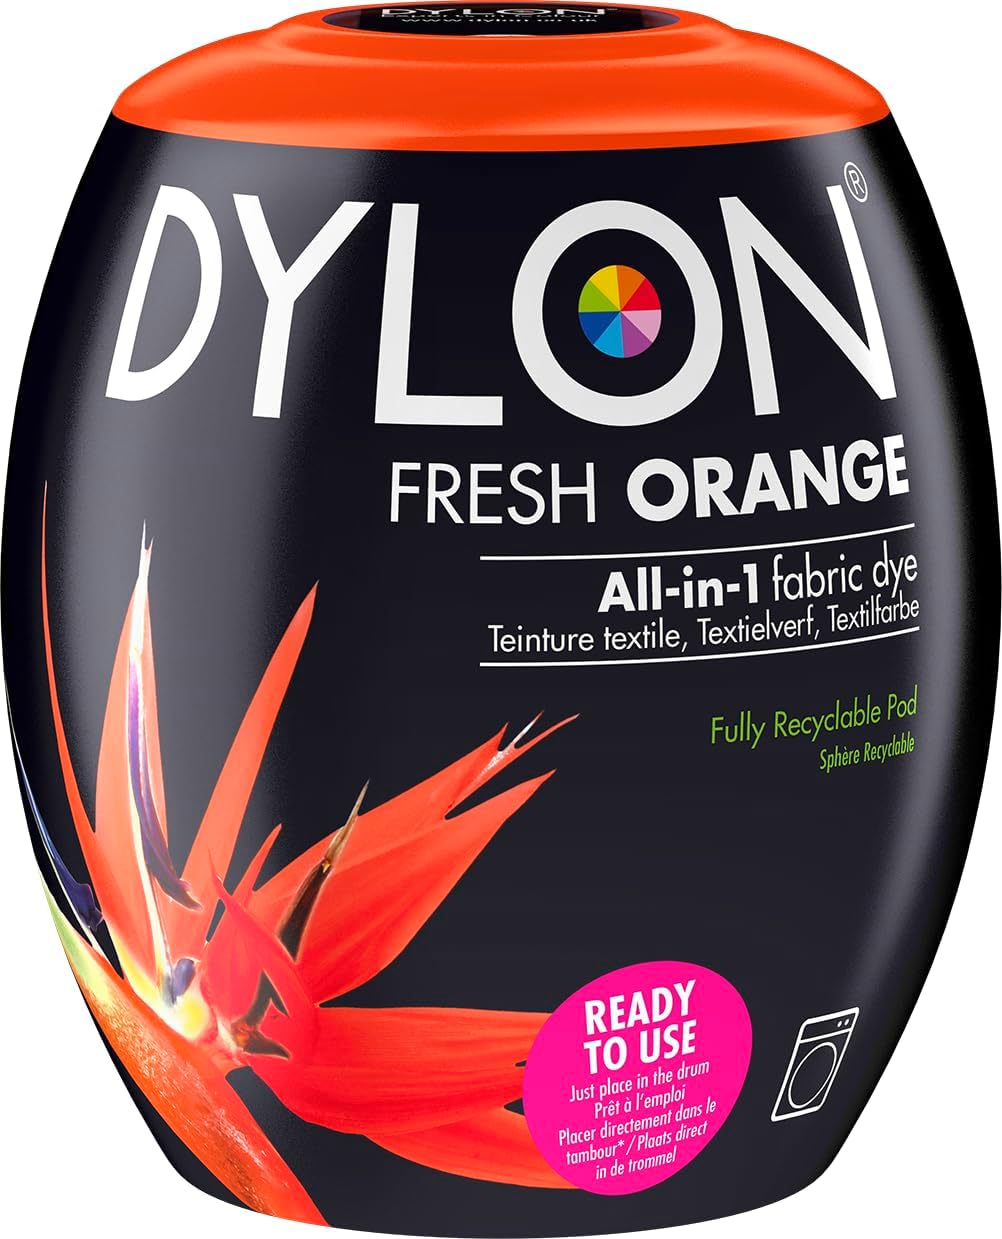 Dylon Fabric Dye Fresh Orange